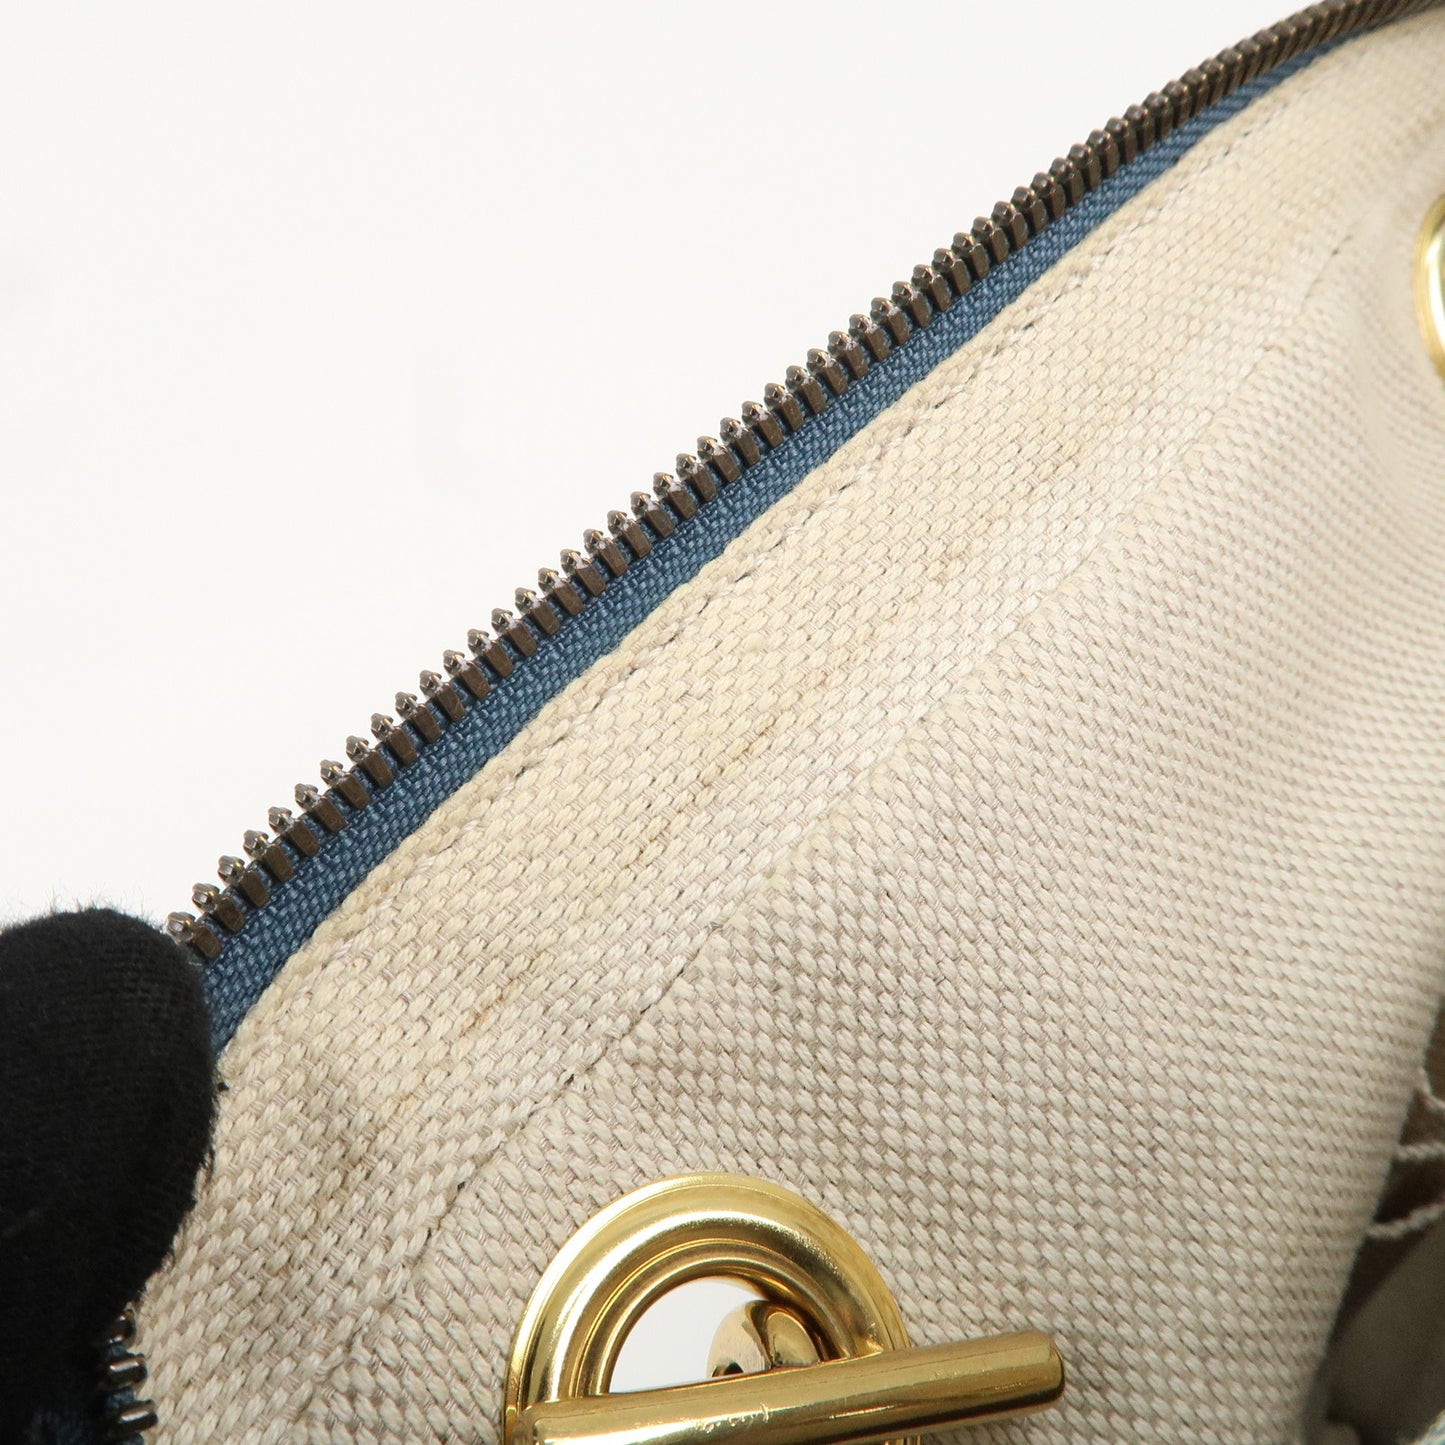 GUCCI SOHO Interlocking G Denim Leather Chain Shoulder Bag 308988